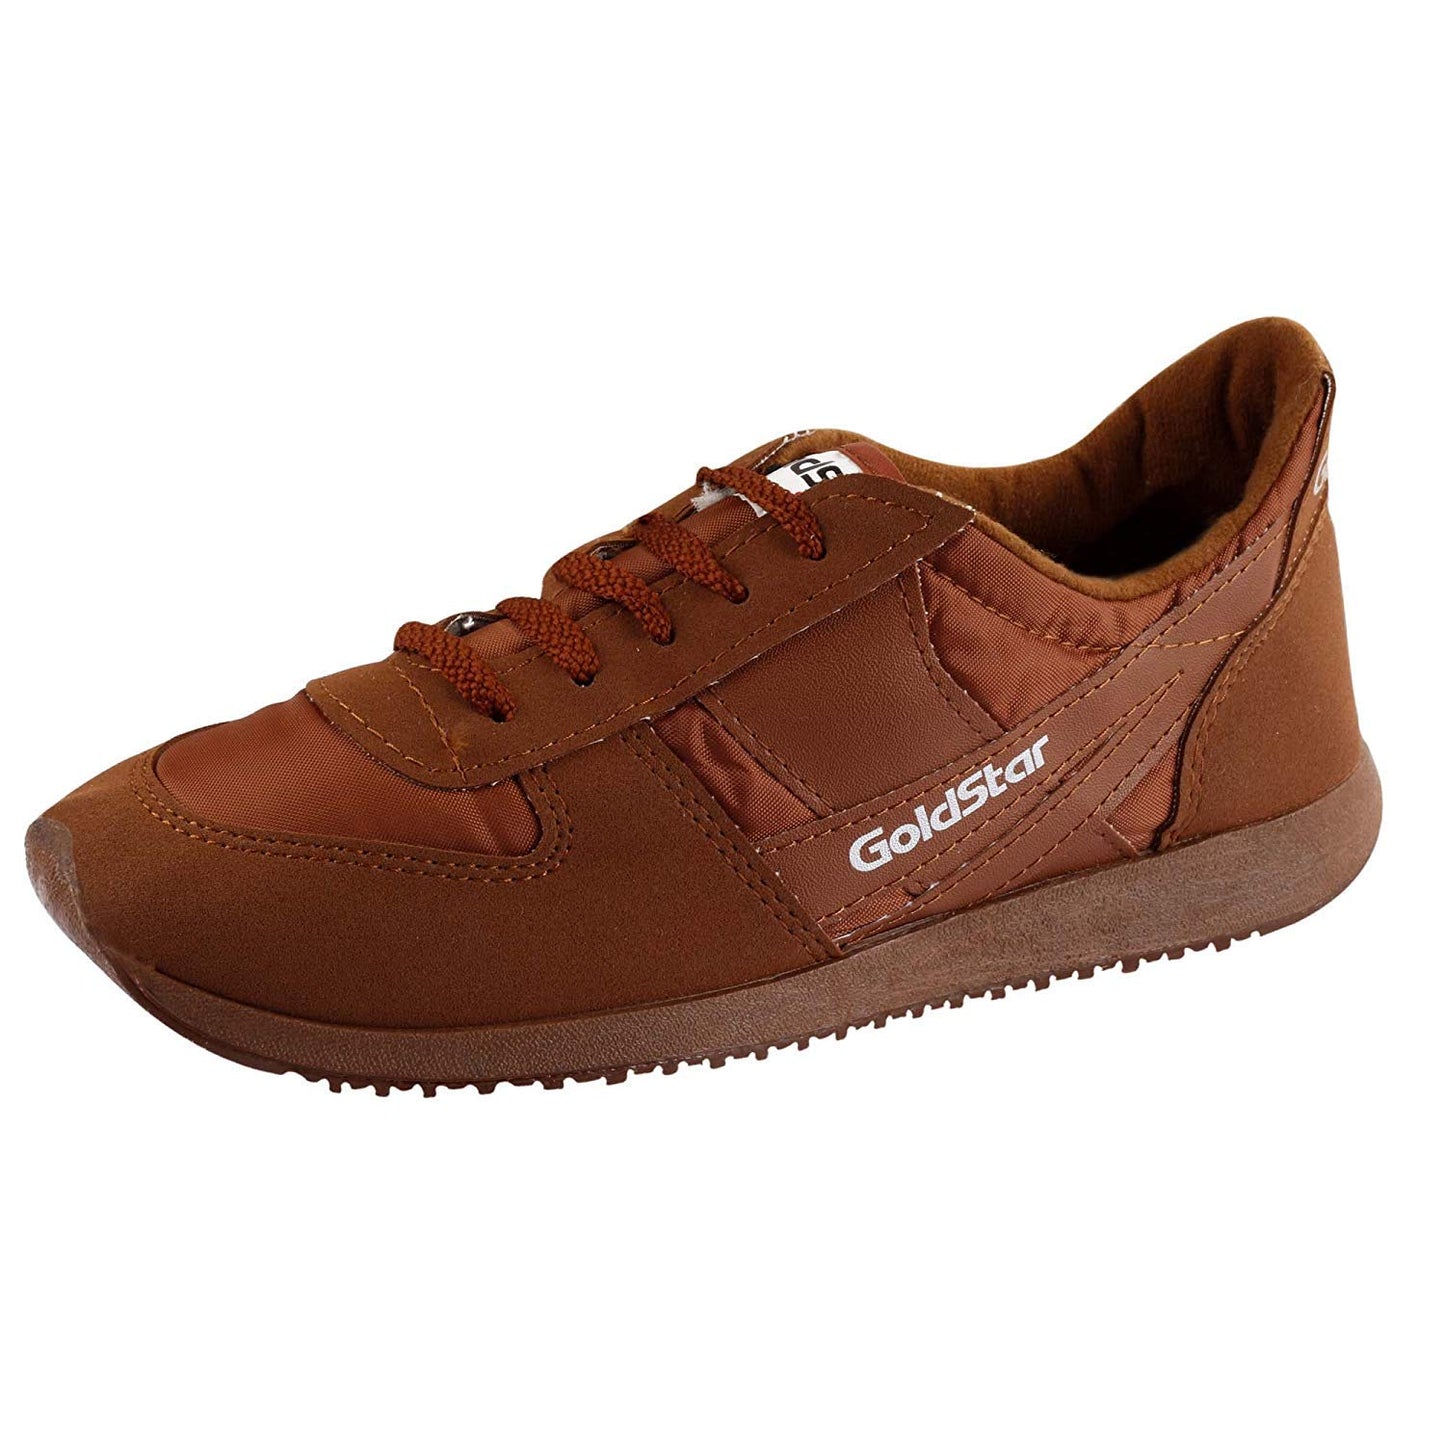 Brown Running Shoe - Goldstar